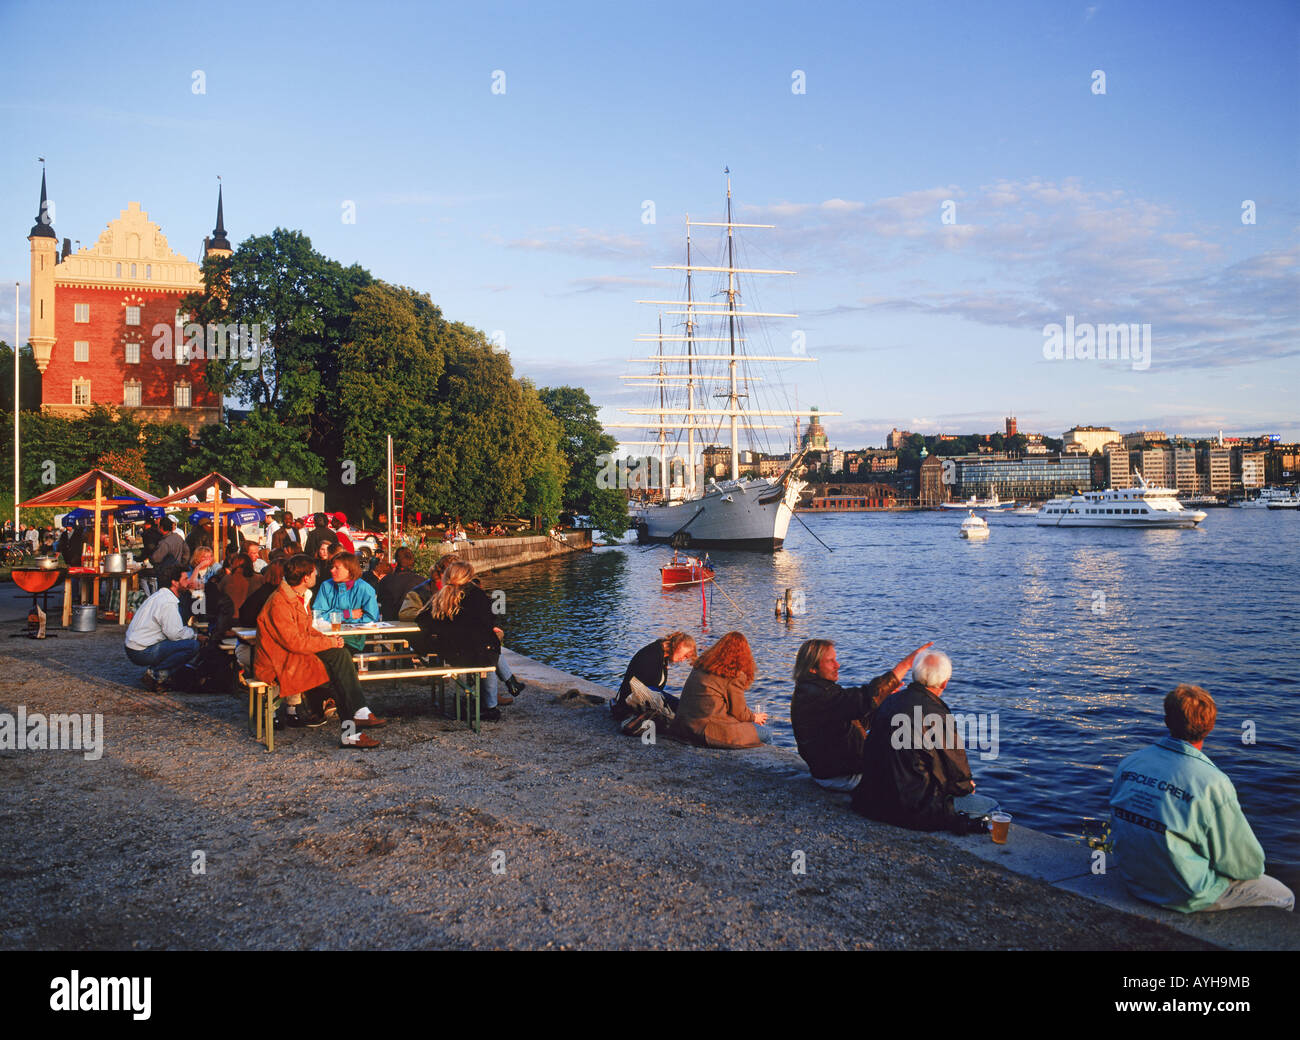 People eating and drinking at Skeppsholmen Island in Stockholm at sunset near Af Chapman schooner Stock Photo